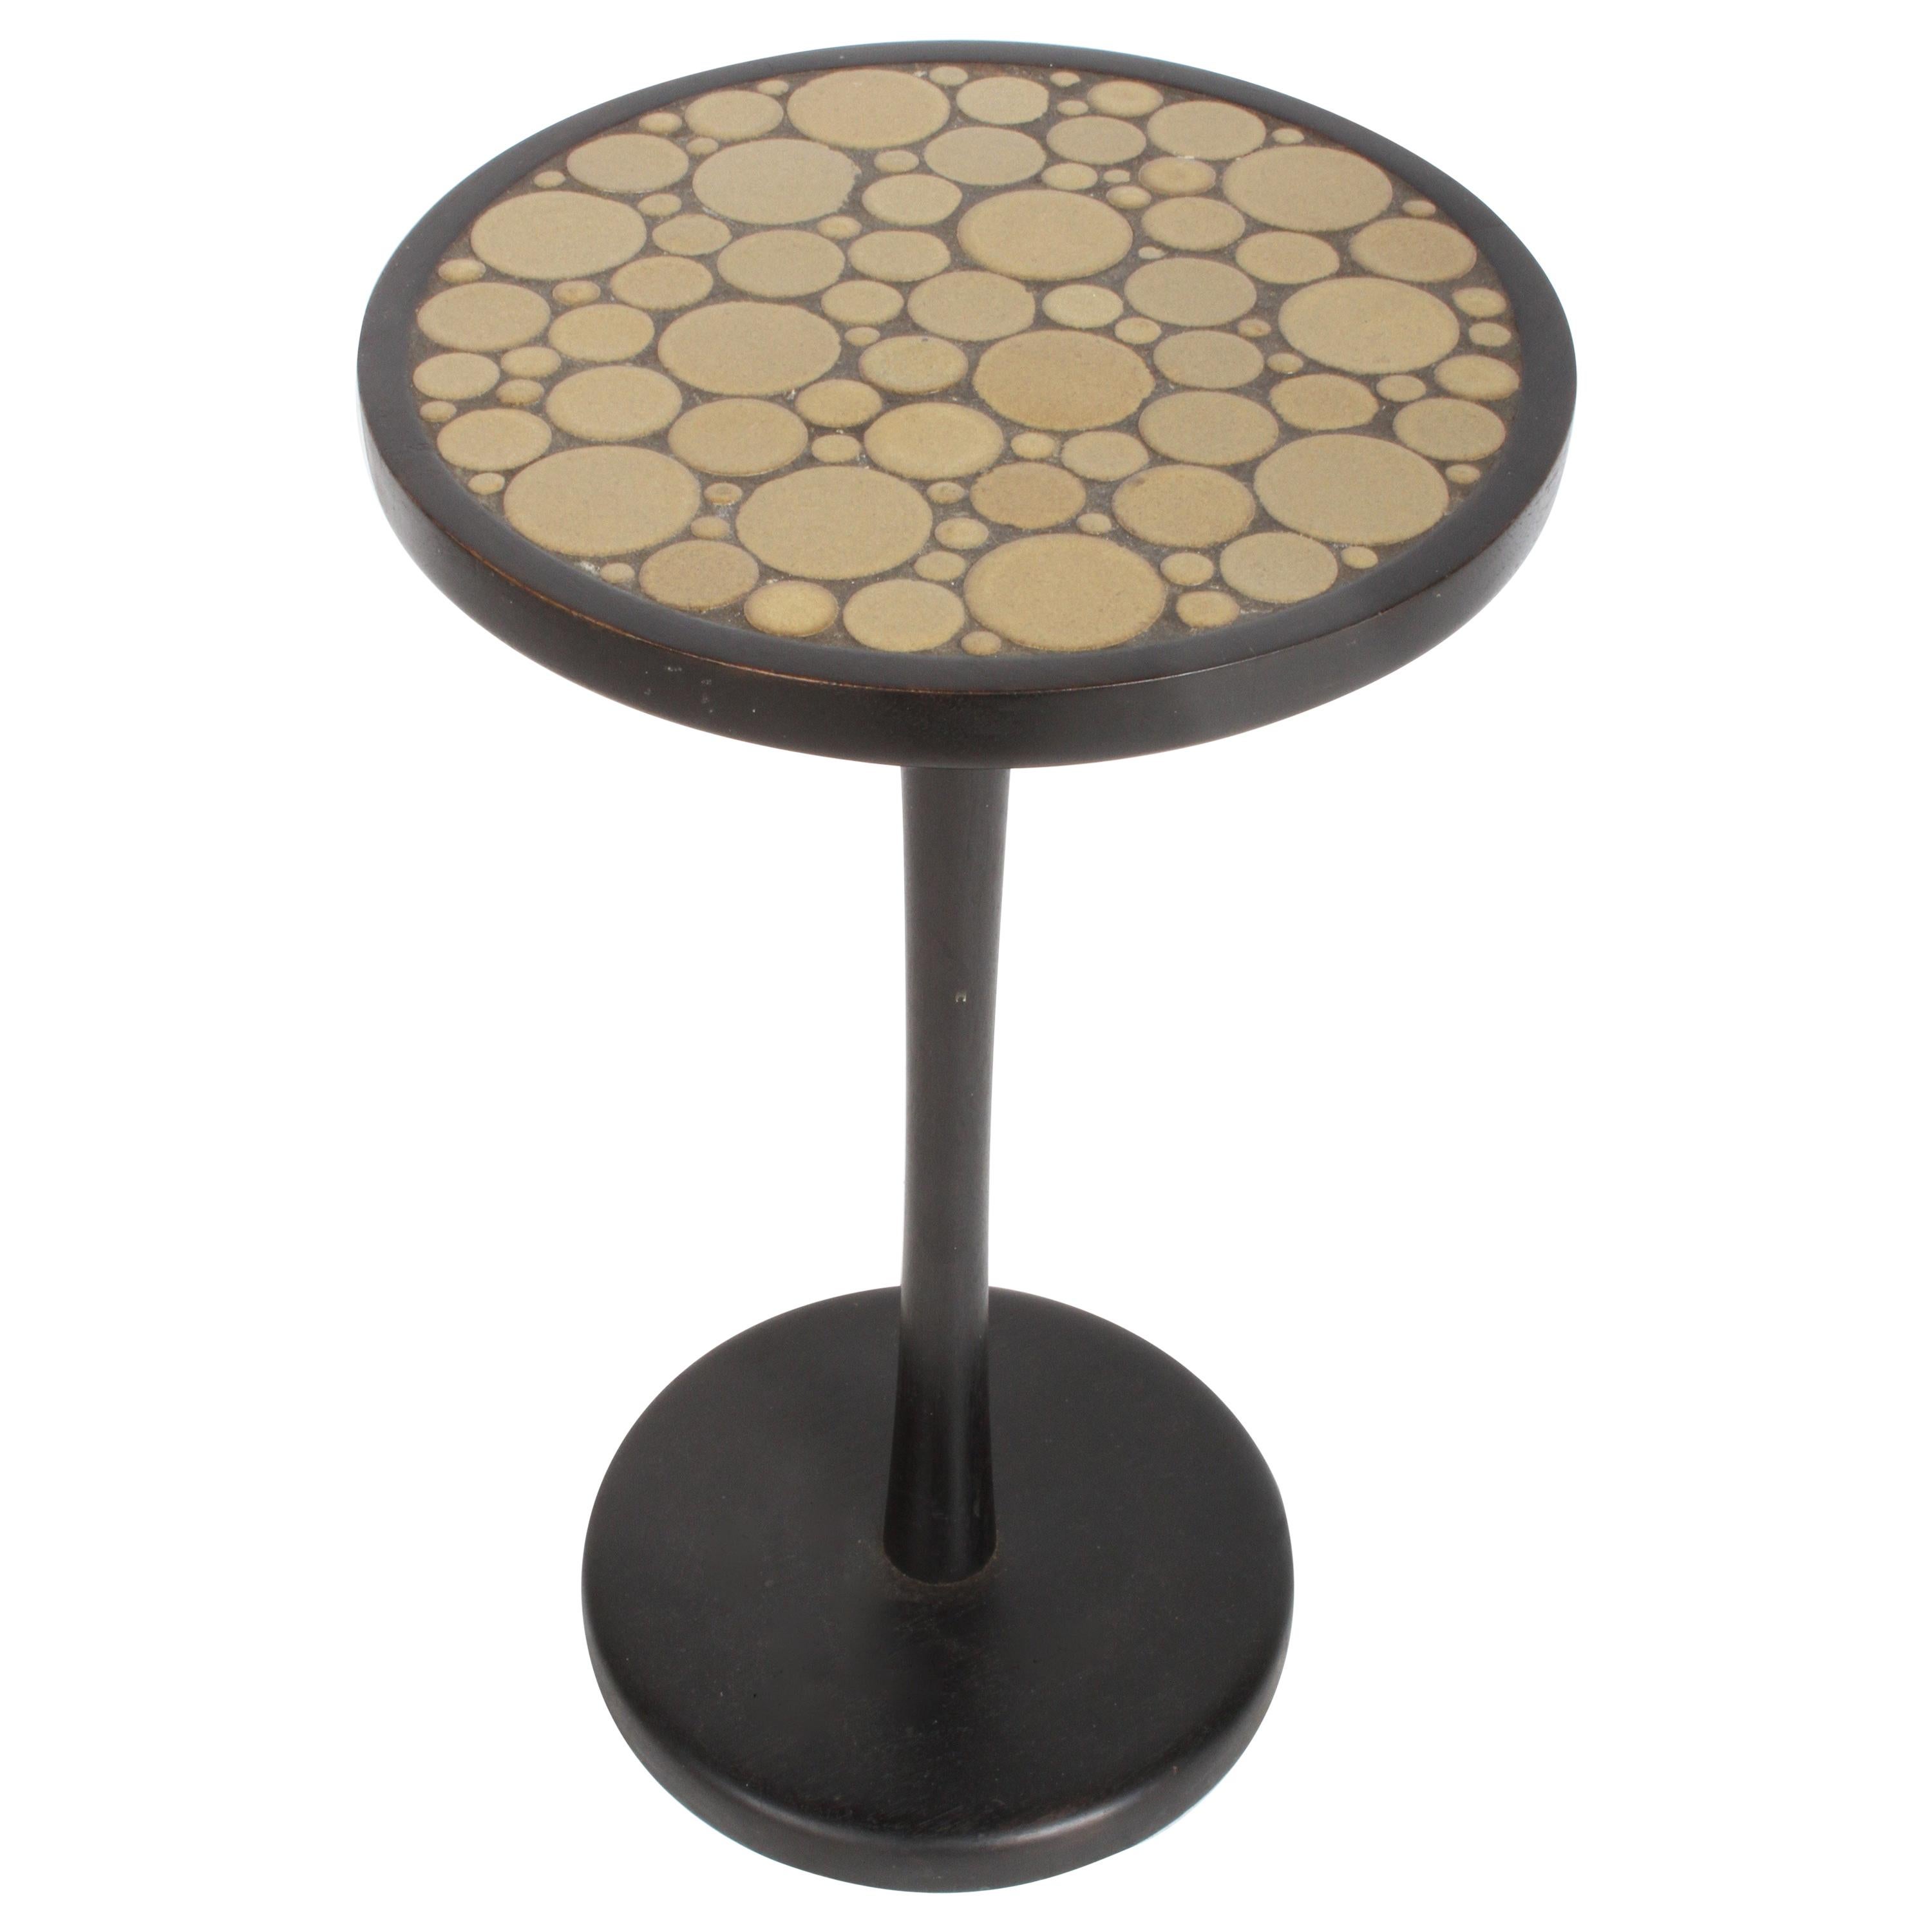 Gordon Martz Ceramic Tile Top Pedestal or Occasional Table 